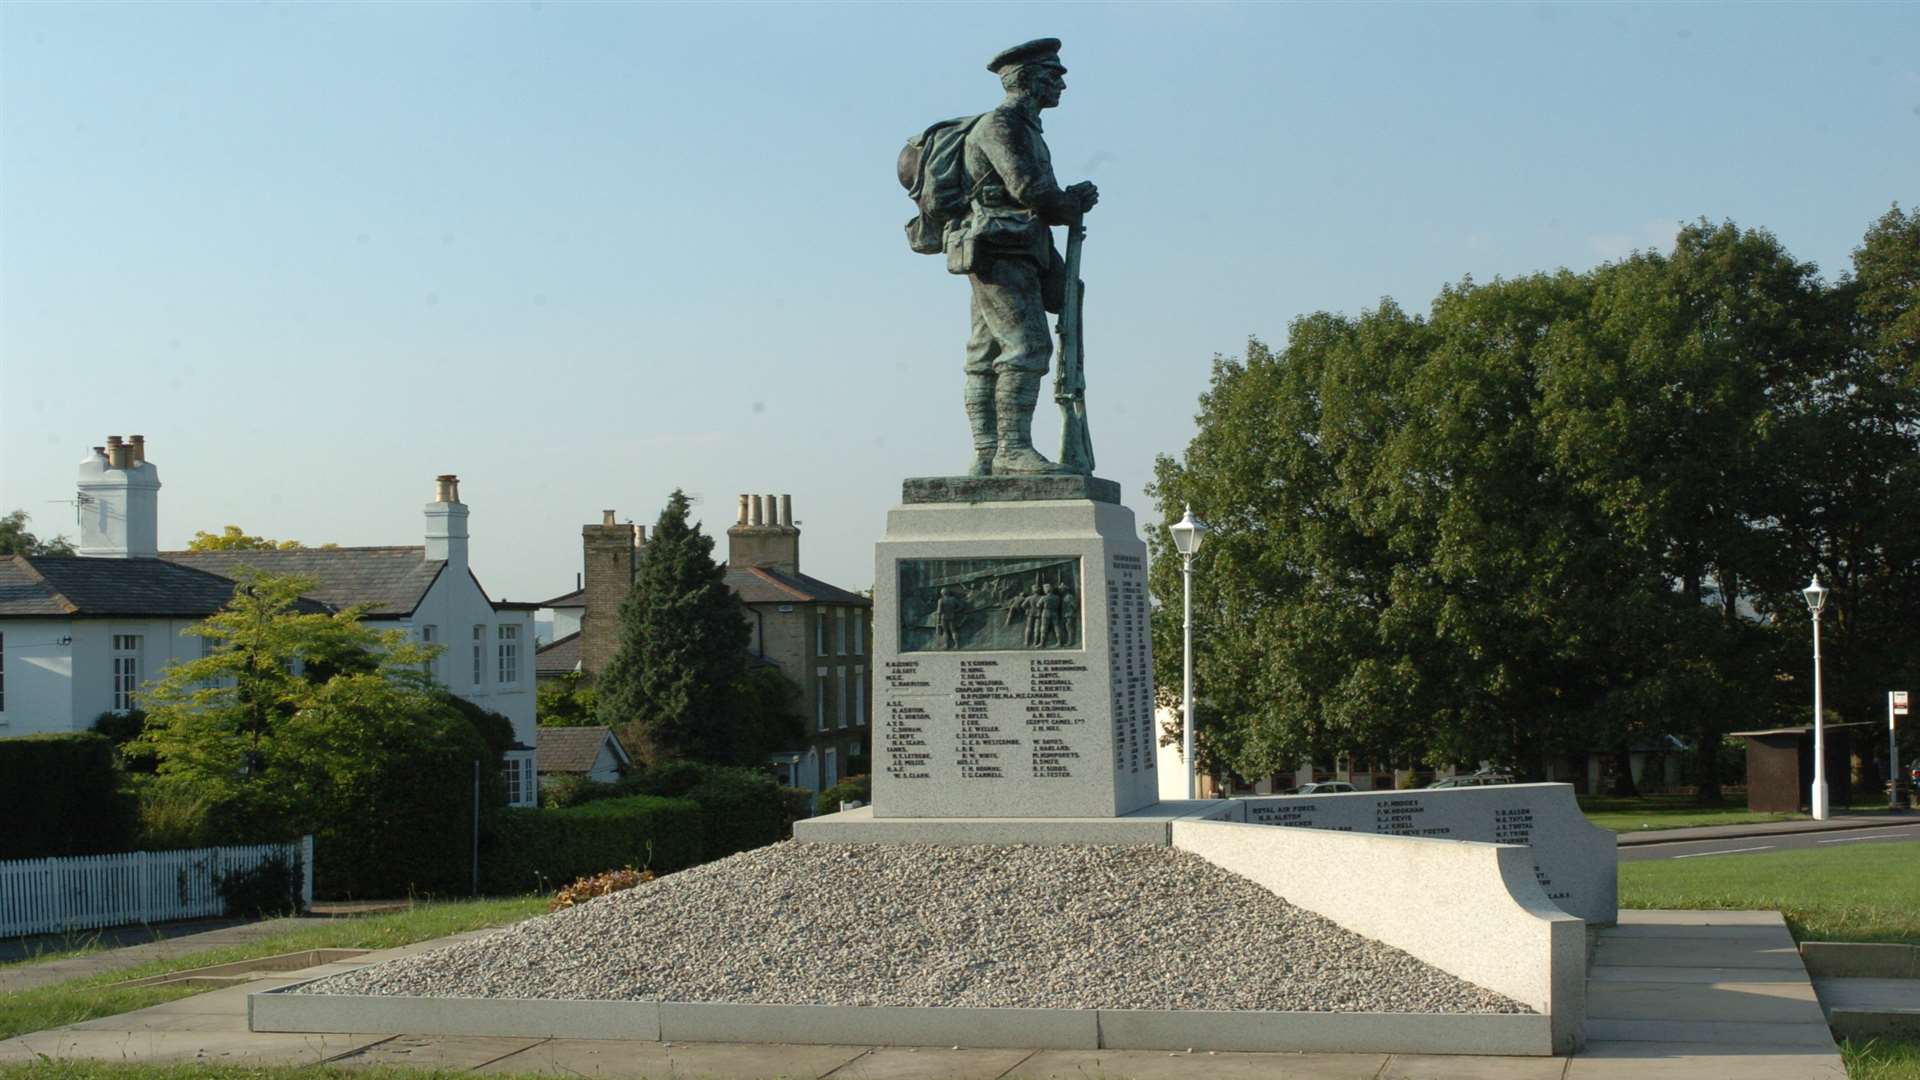 The war memorial at The Vine